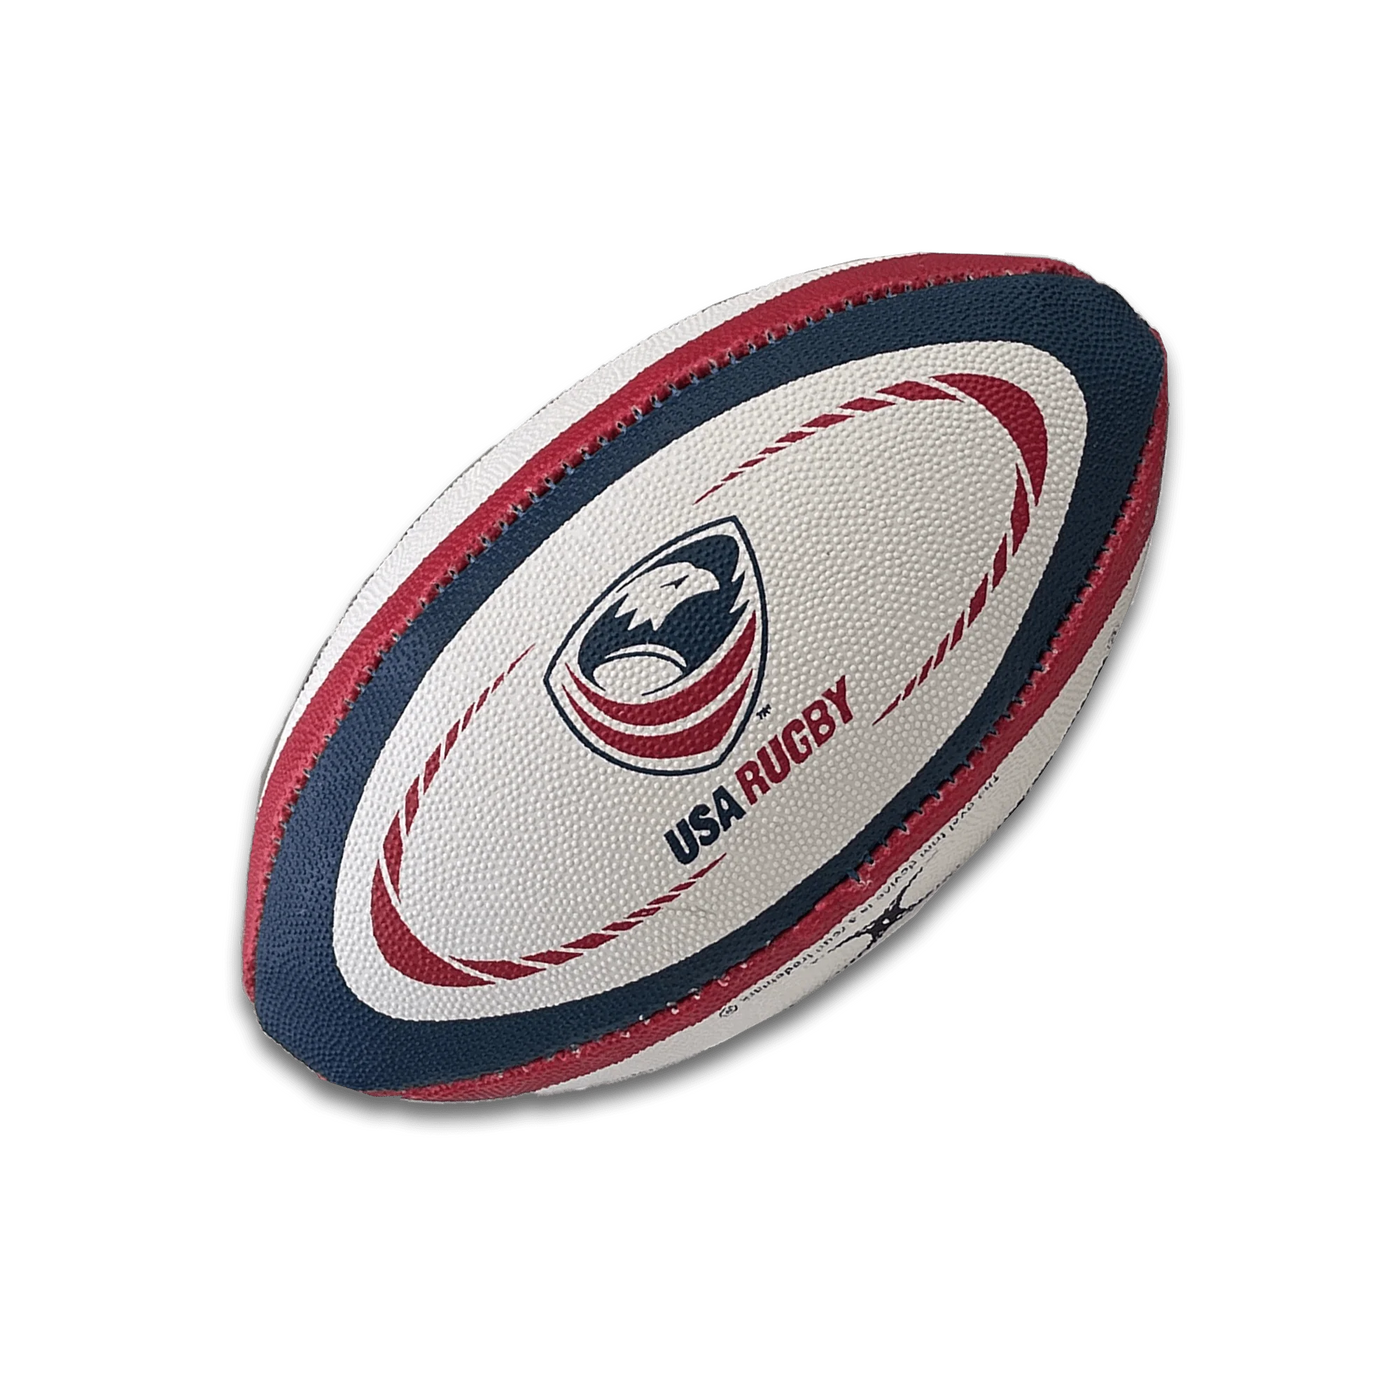 USA Mini Rugby Ball